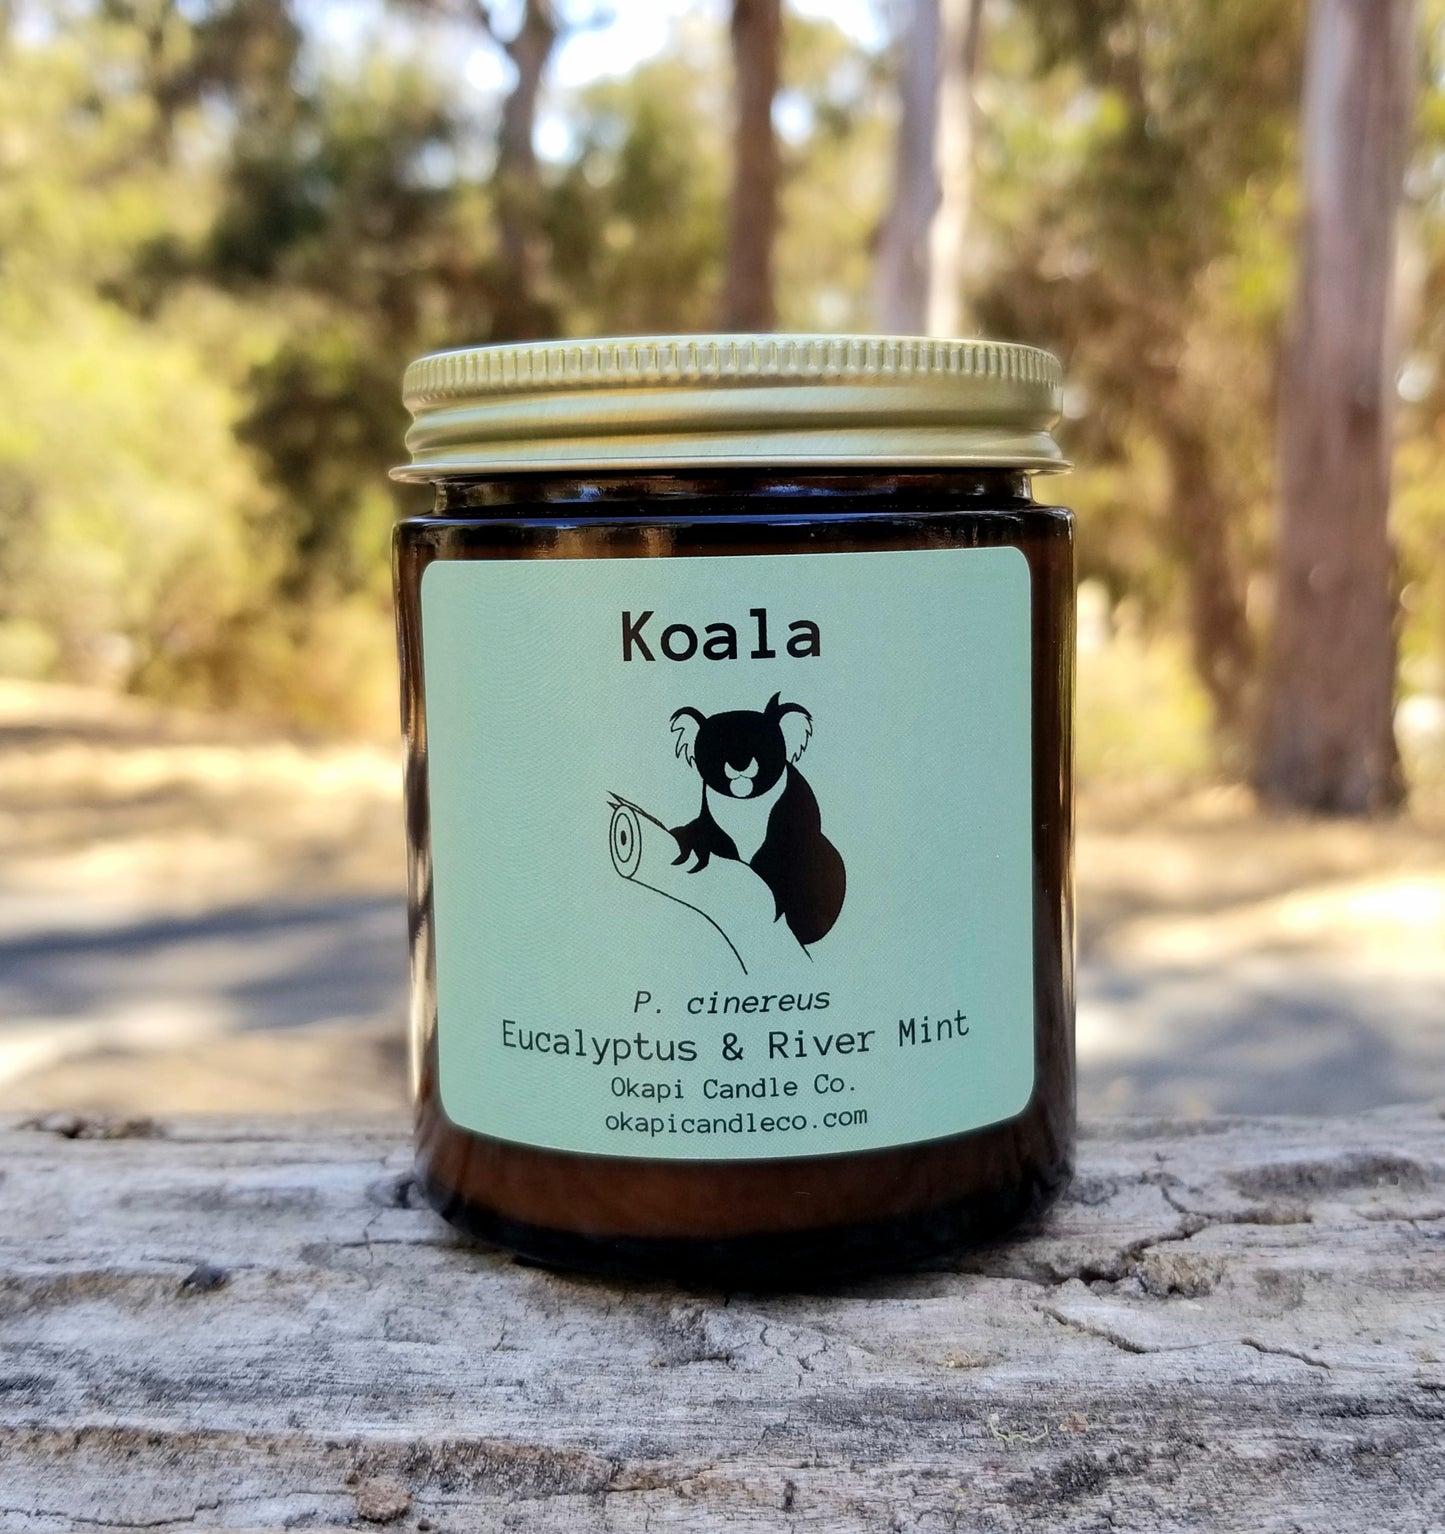 Koala Soy Candle - Eucalyptus & River Mint Fragrance